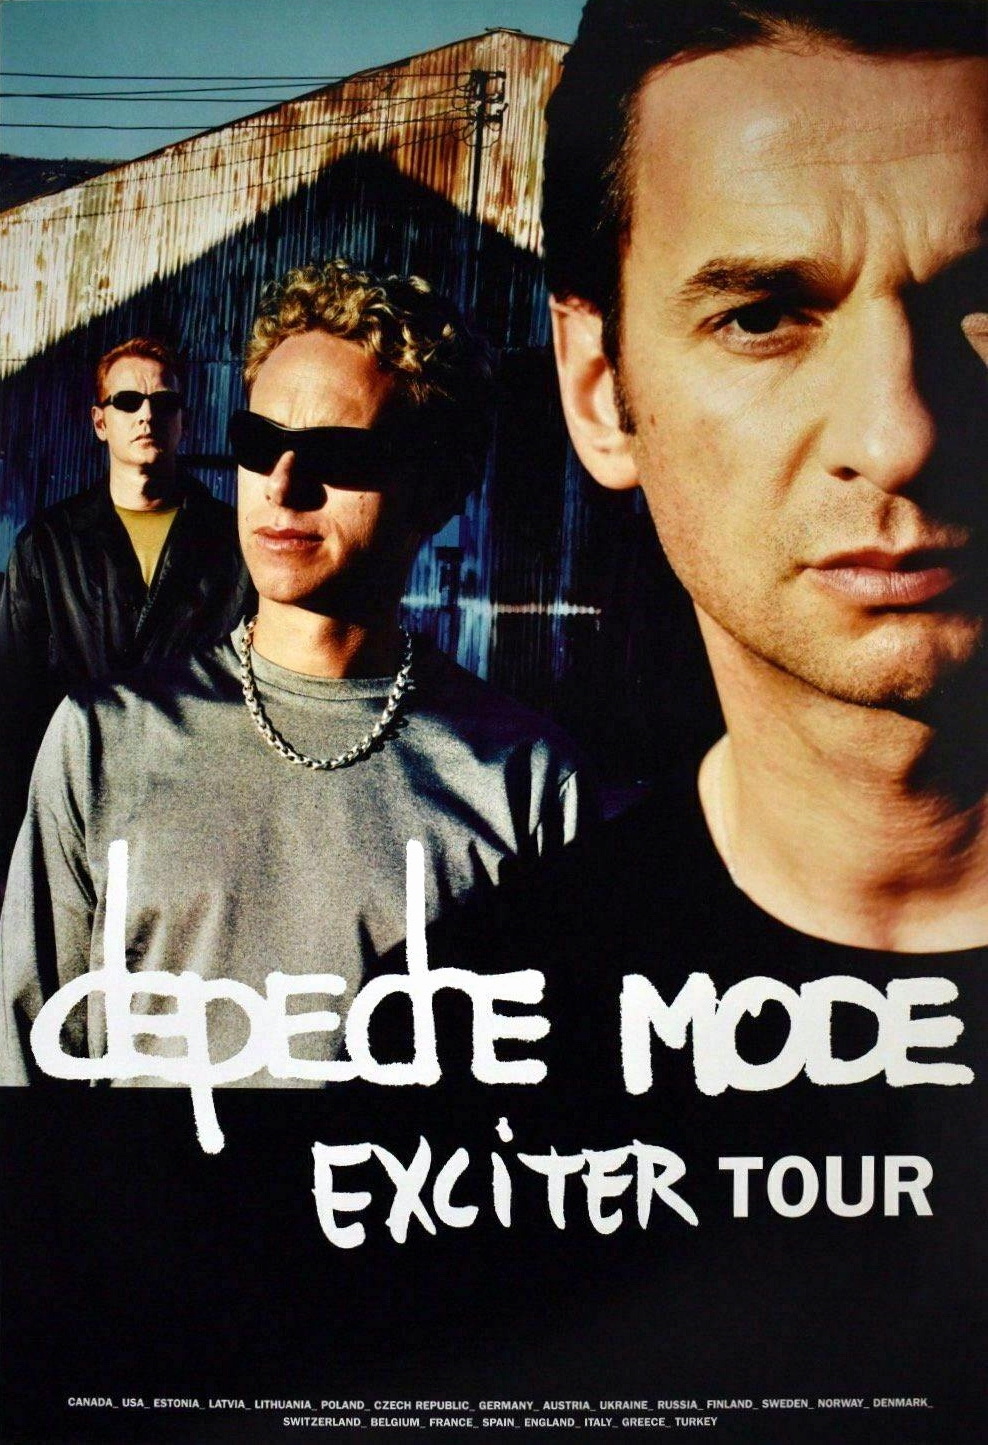 depeche mode exciter tour paris